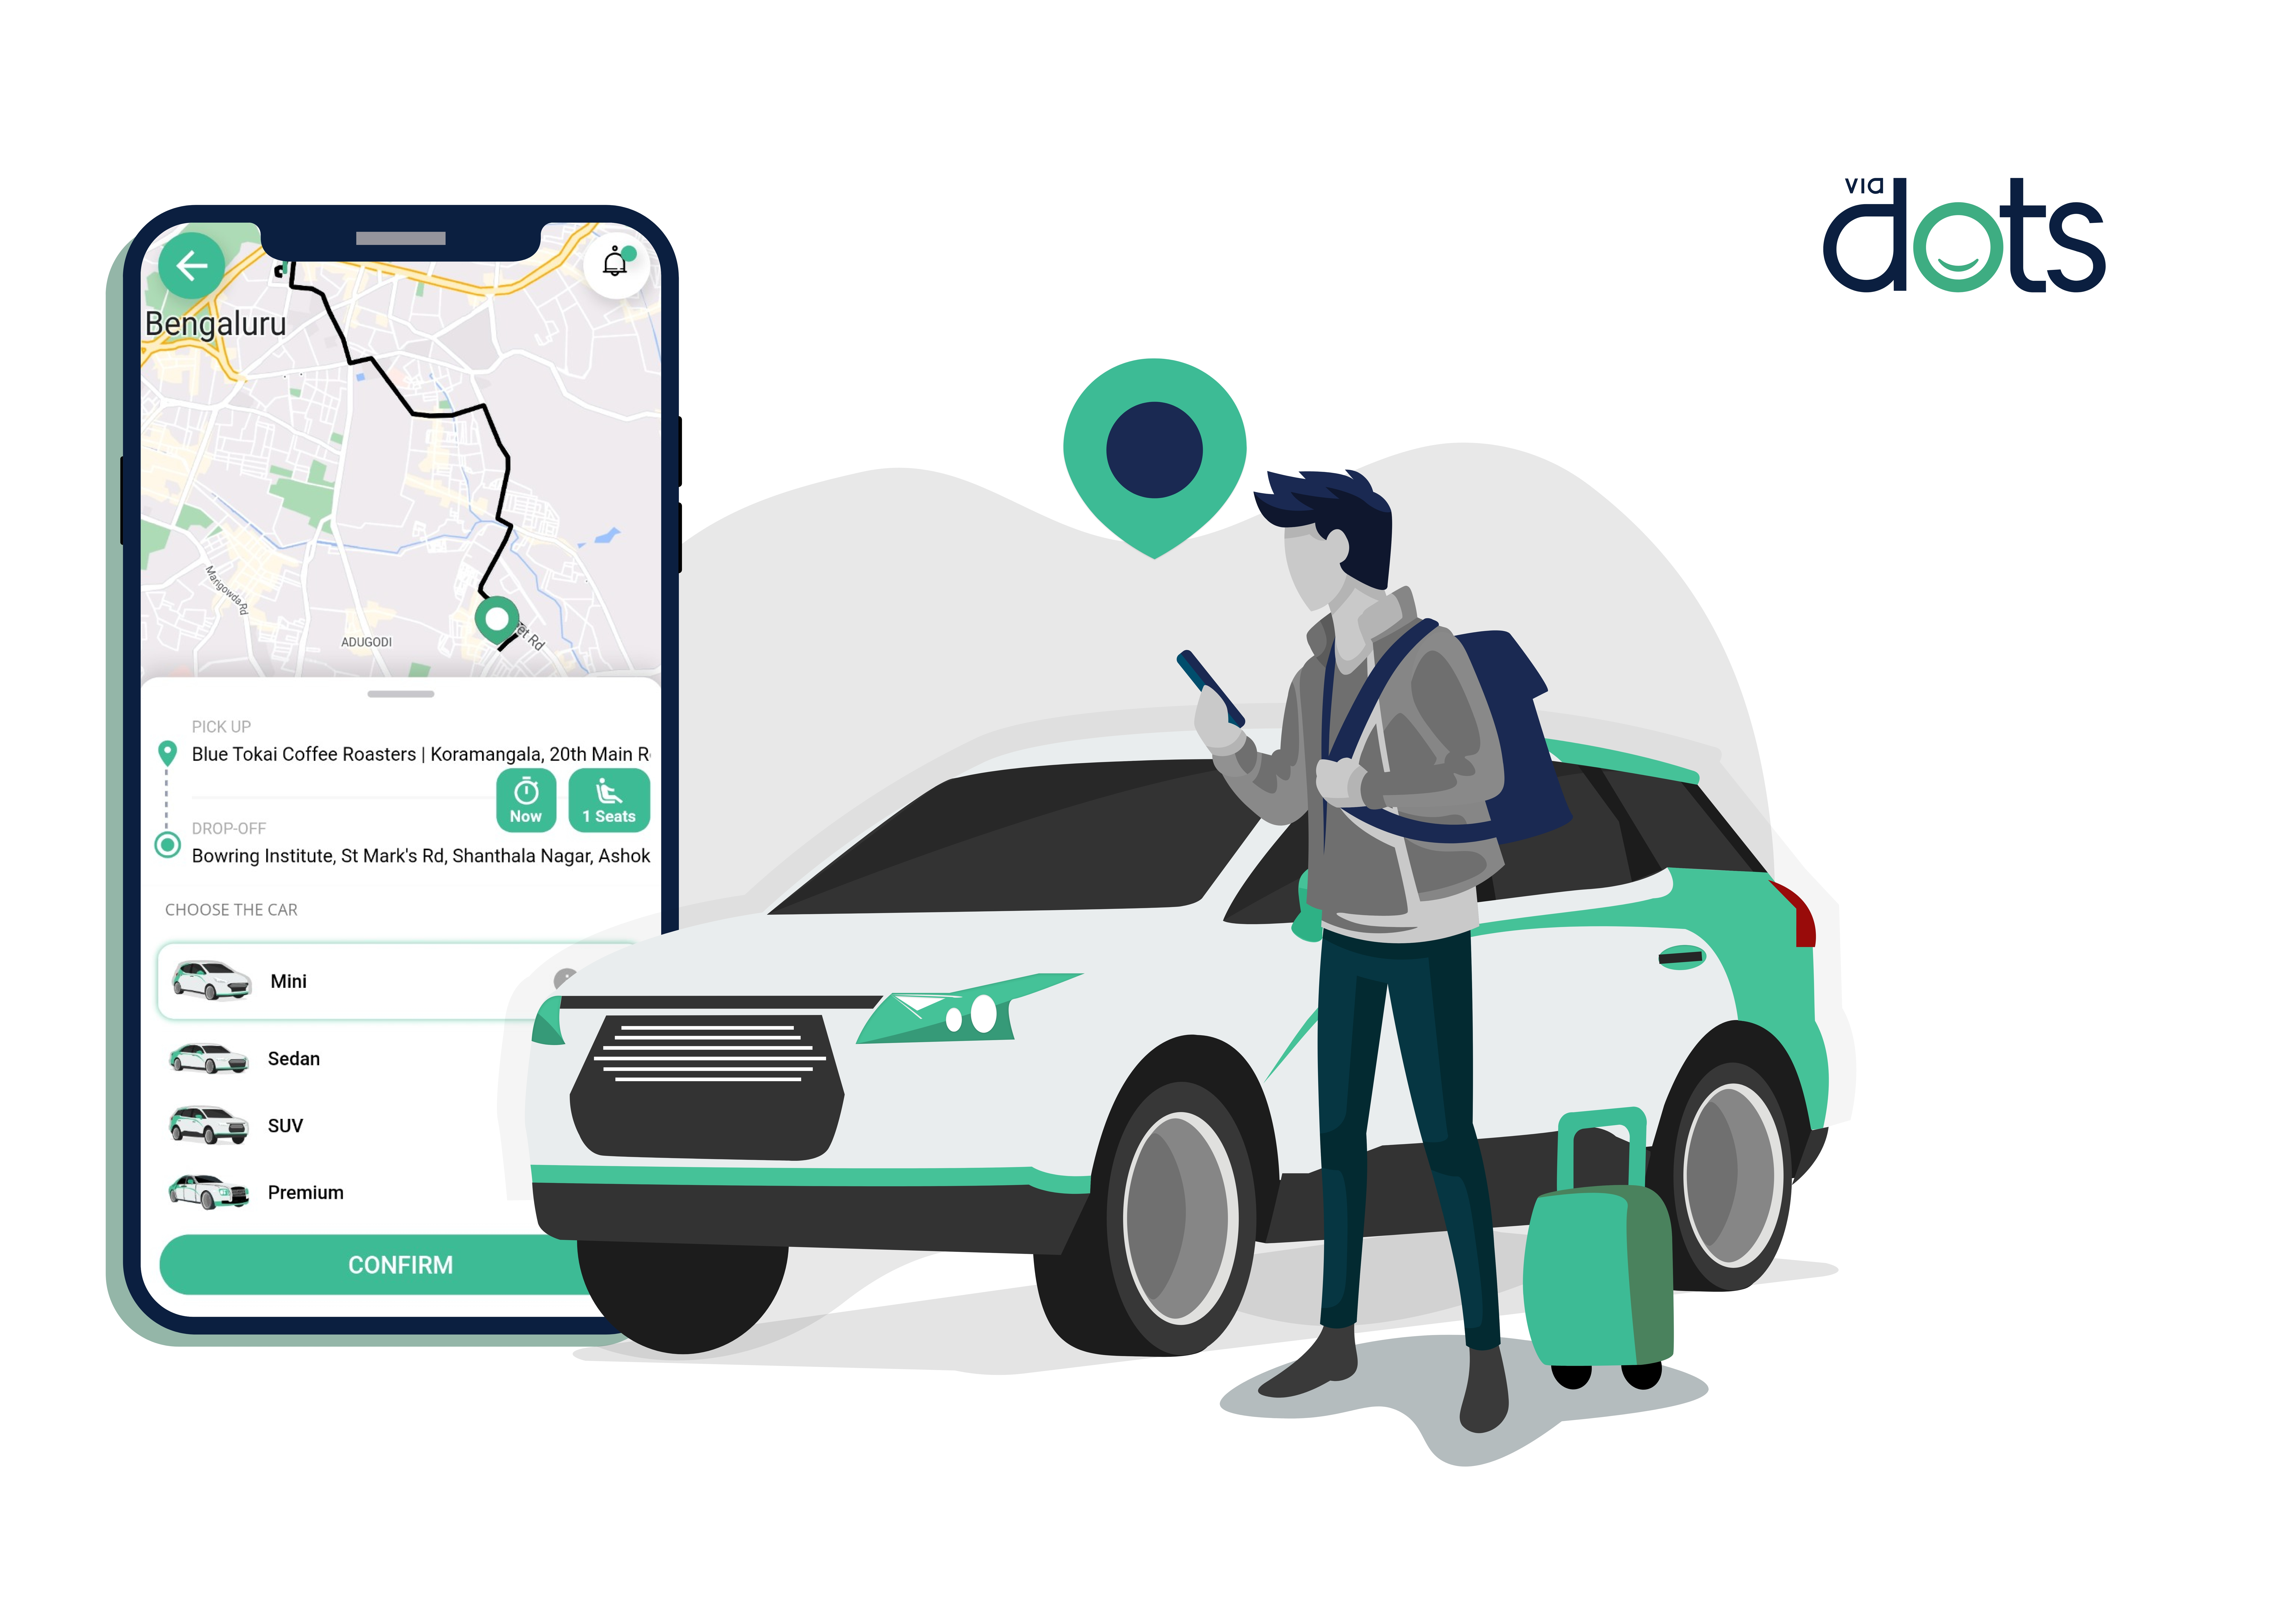 viaDOTS Launches Digital Meter Taxi Service in Bengaluru